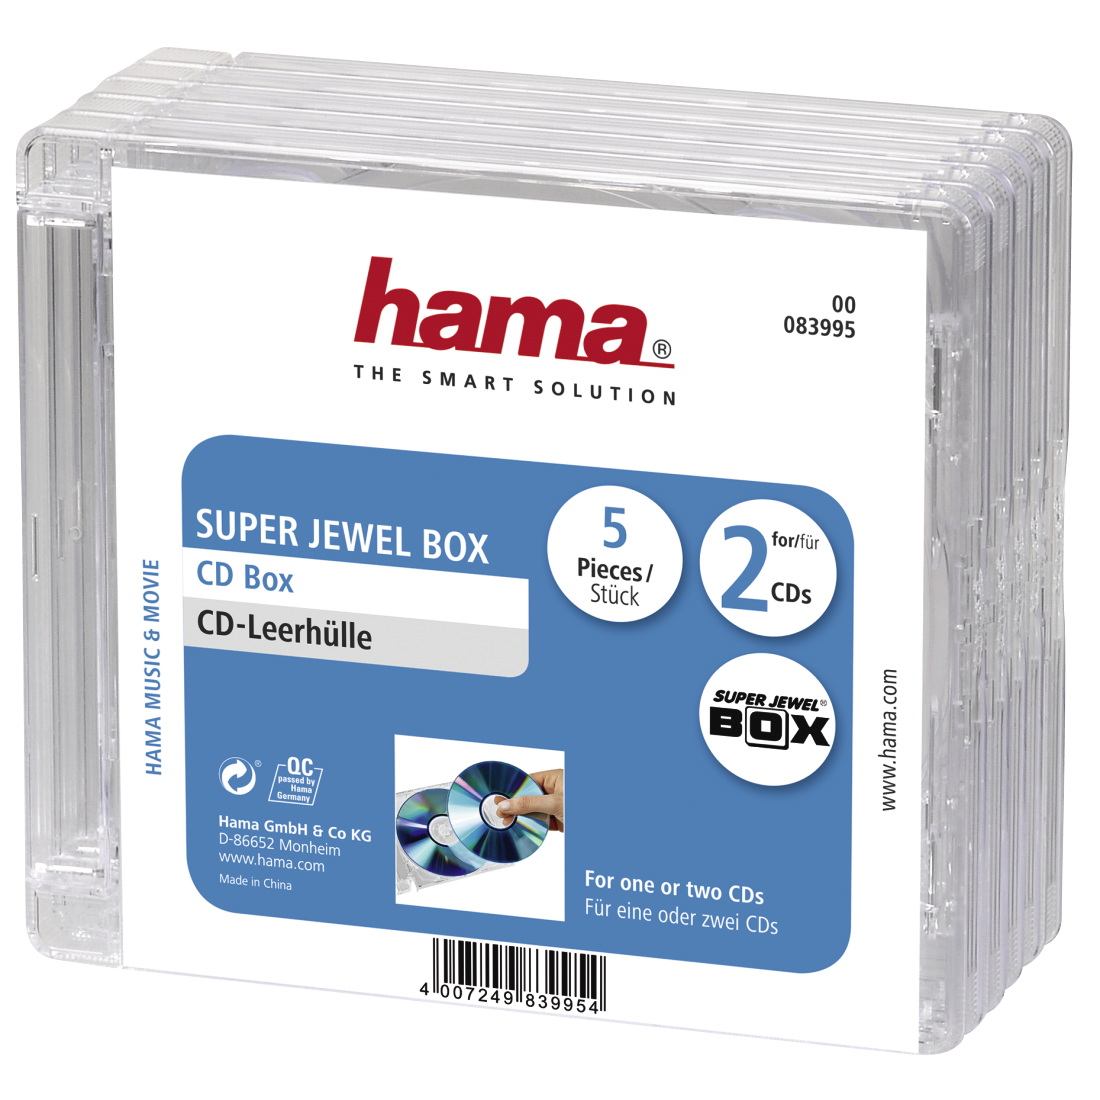 00083995 Hama Super Jewel Box, pack of 5, transparent